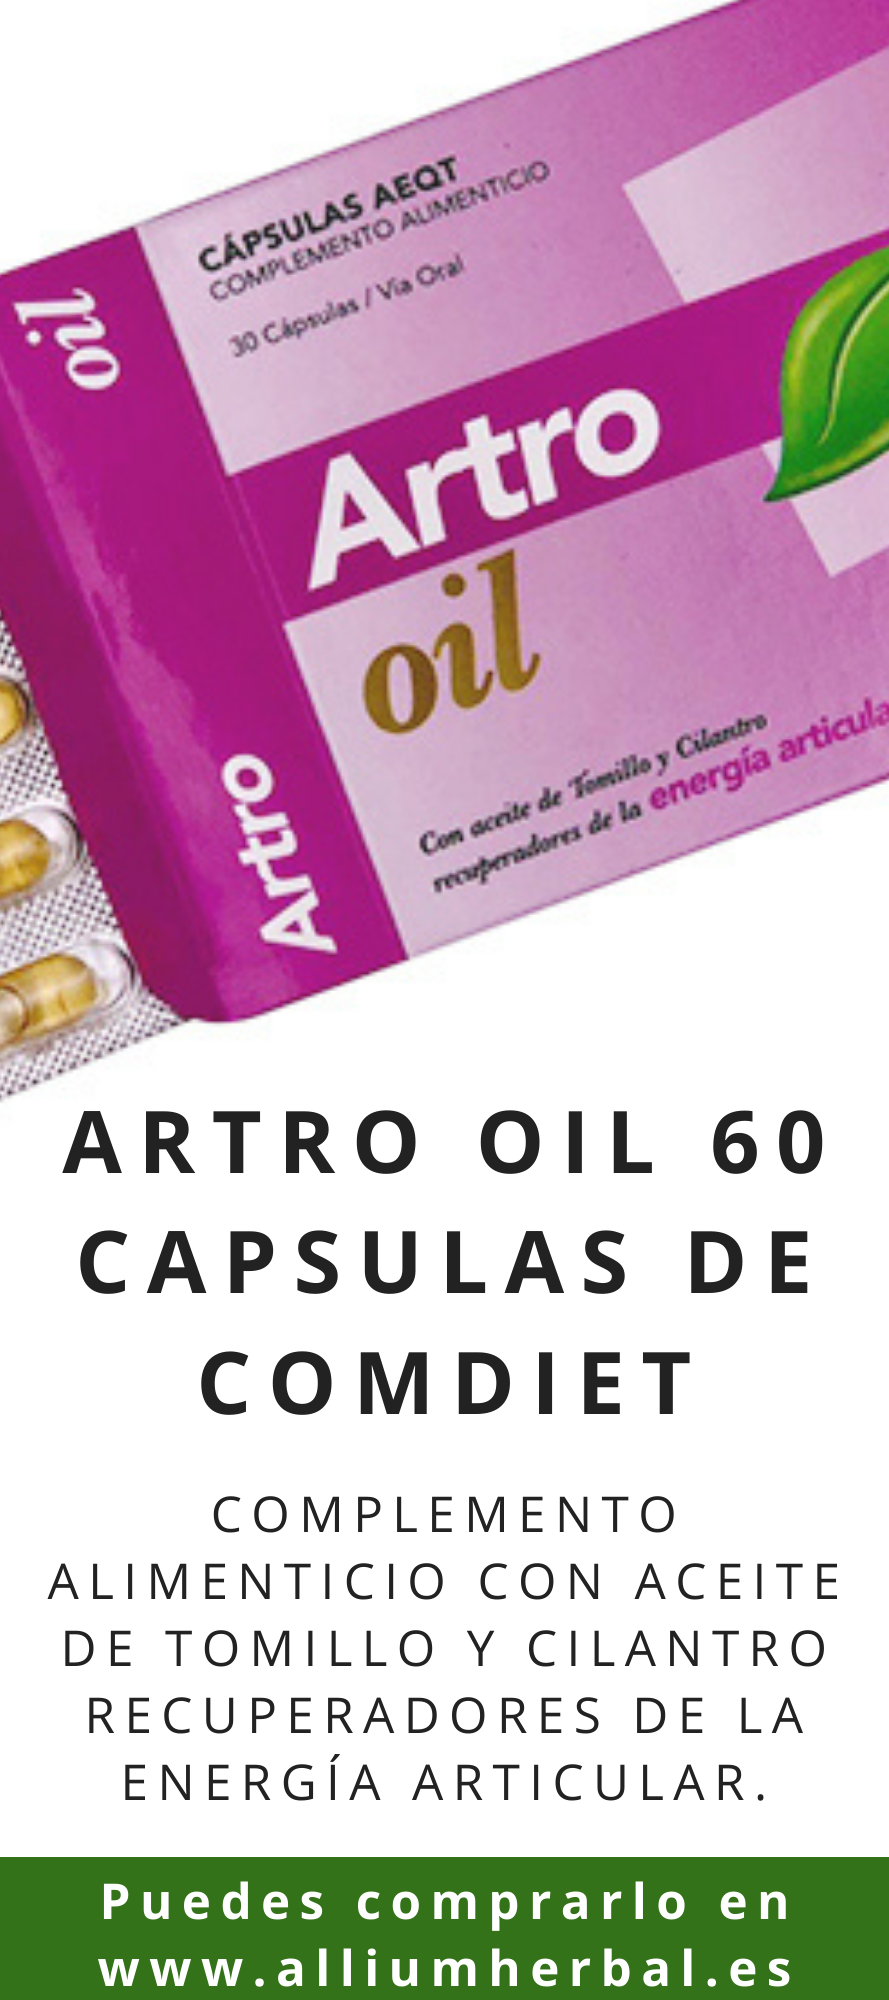 Artro Oil 60 capsulas de Comdiet